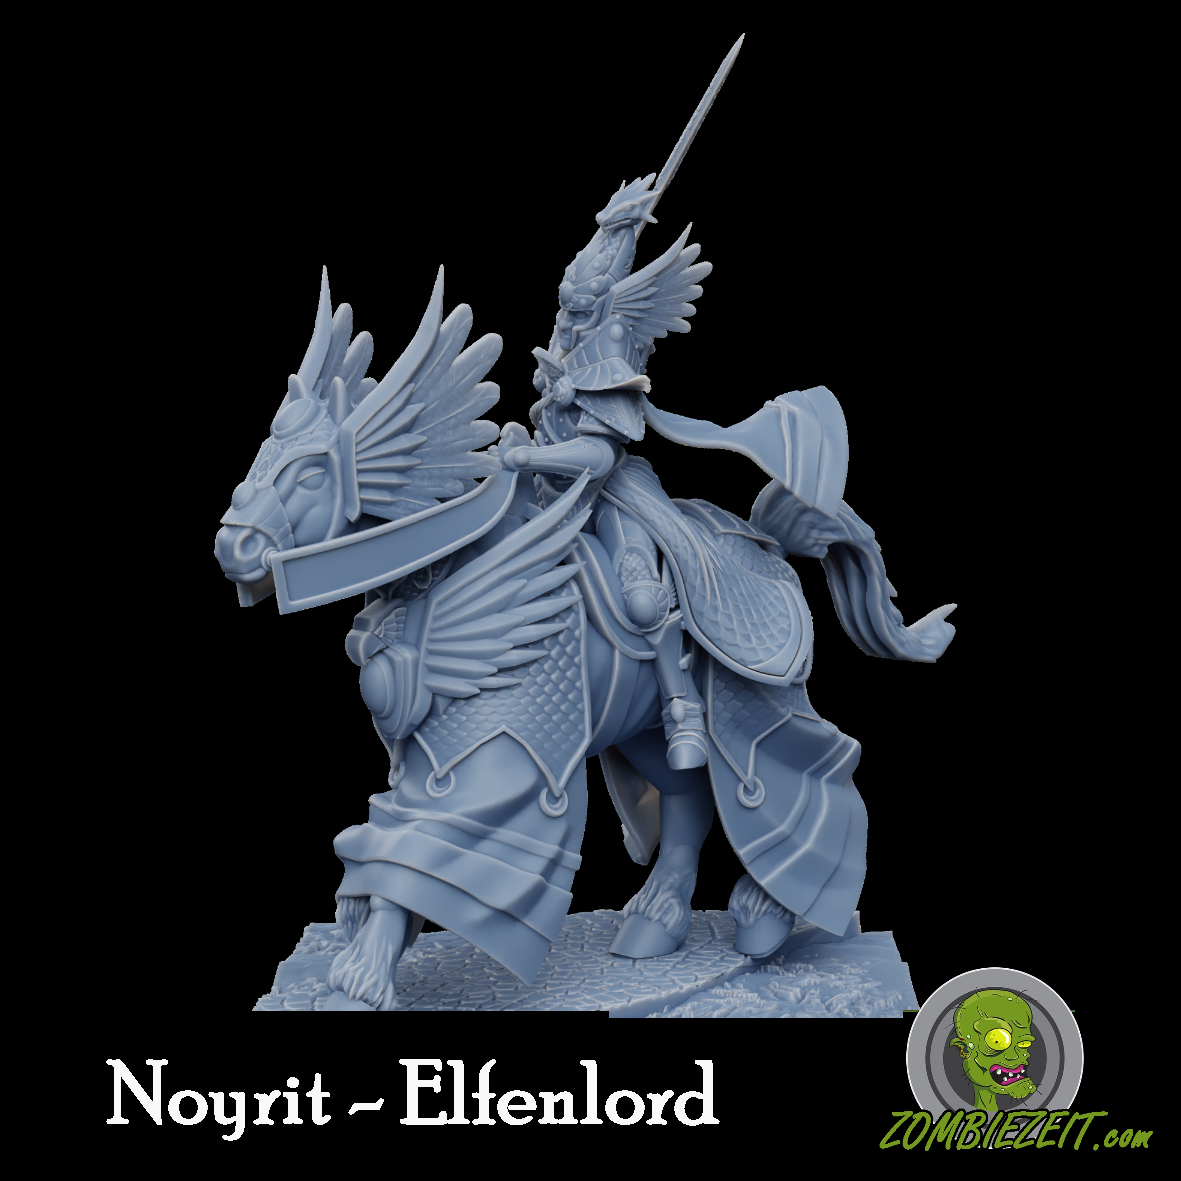 Noyrit - Elfenlord